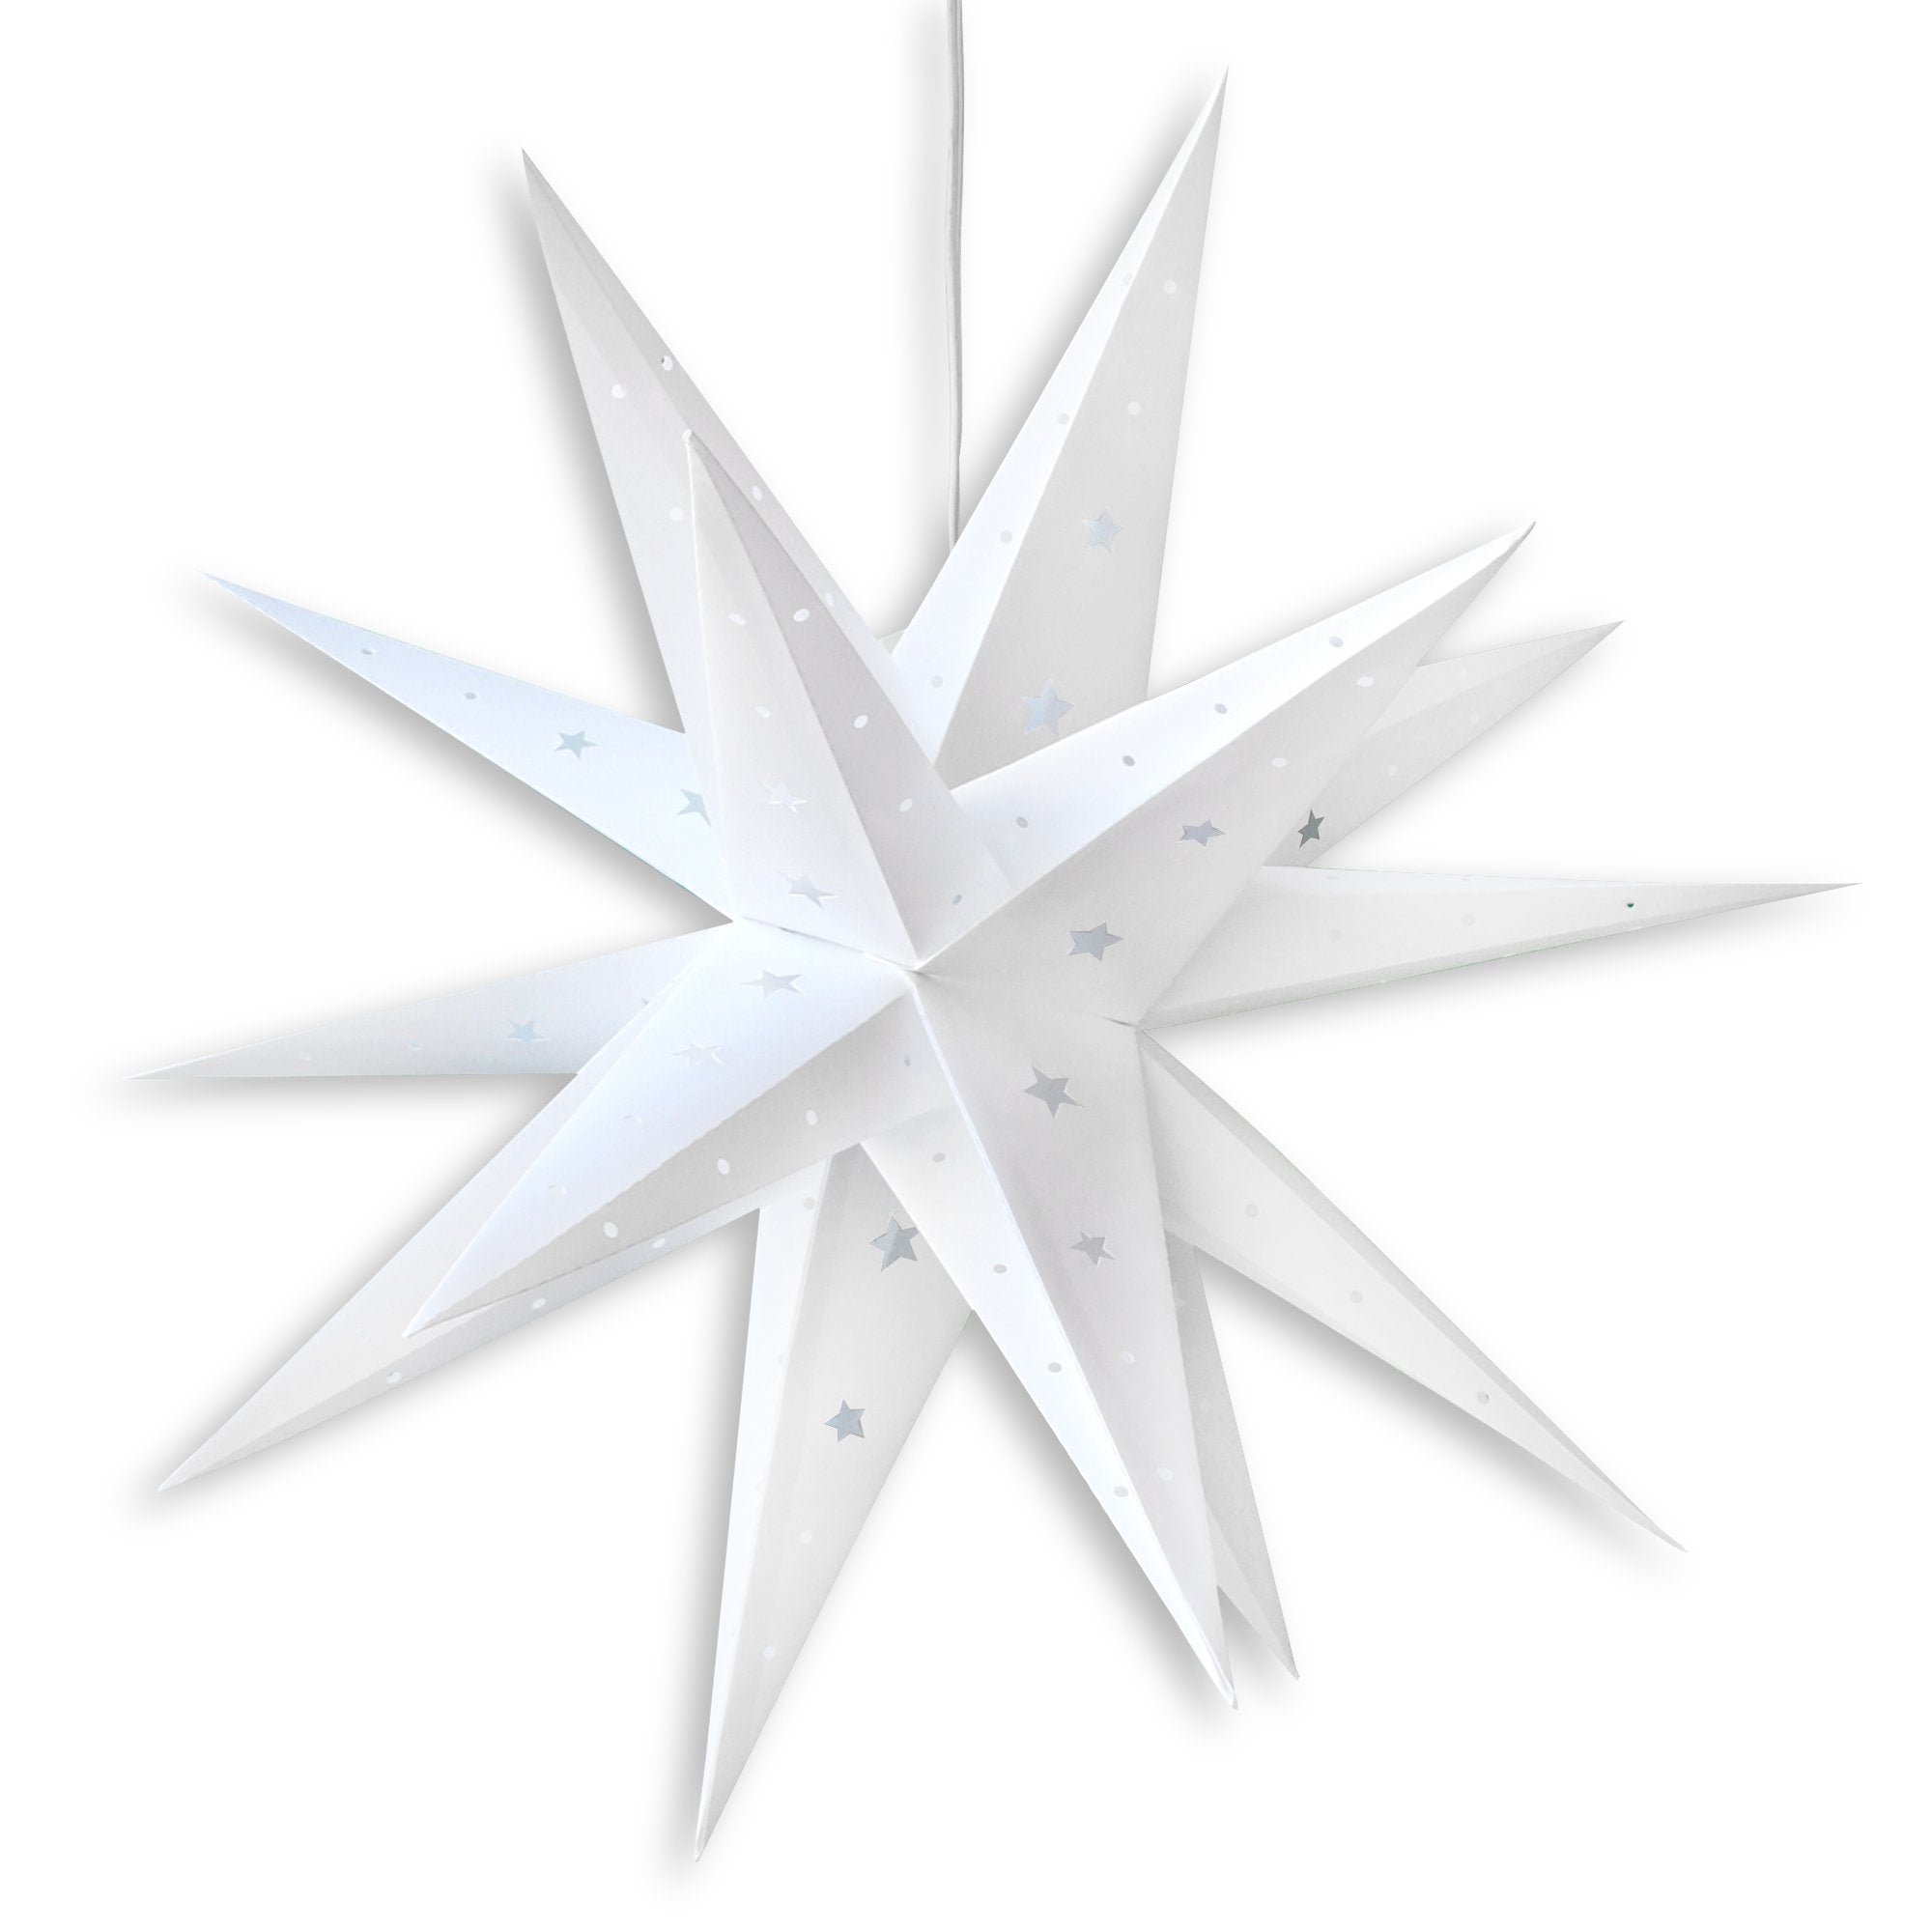 23" White Moravian Weatherproof Star Lantern Lamp, Multi-Point Hanging Decoration (Shade Only)